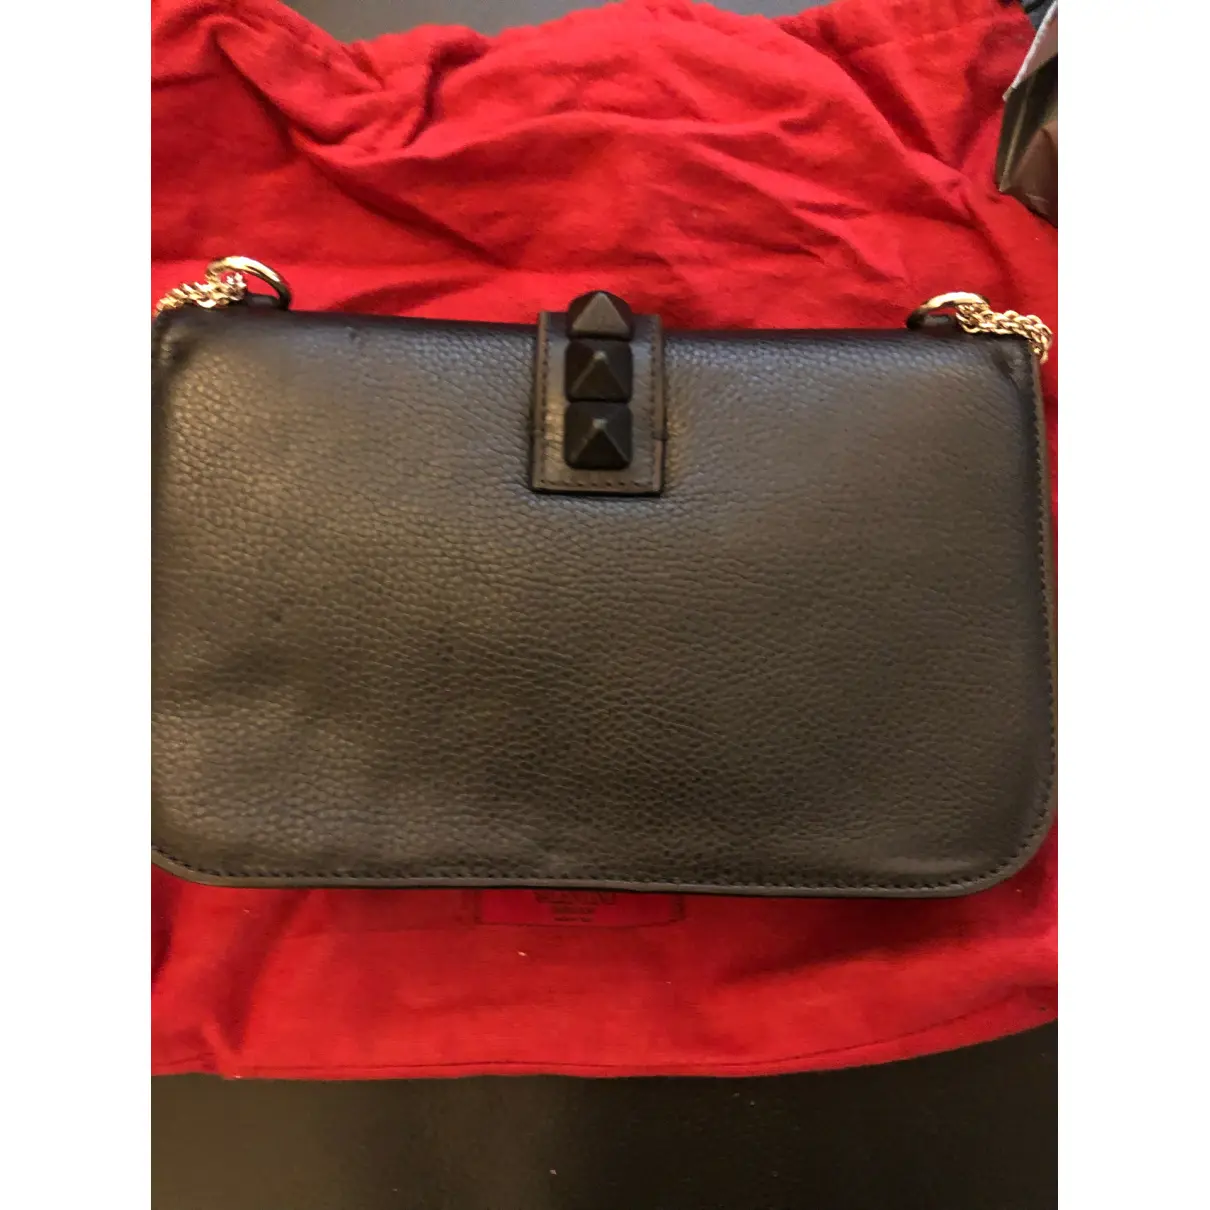 Buy Valentino Garavani Glam Lock leather handbag online